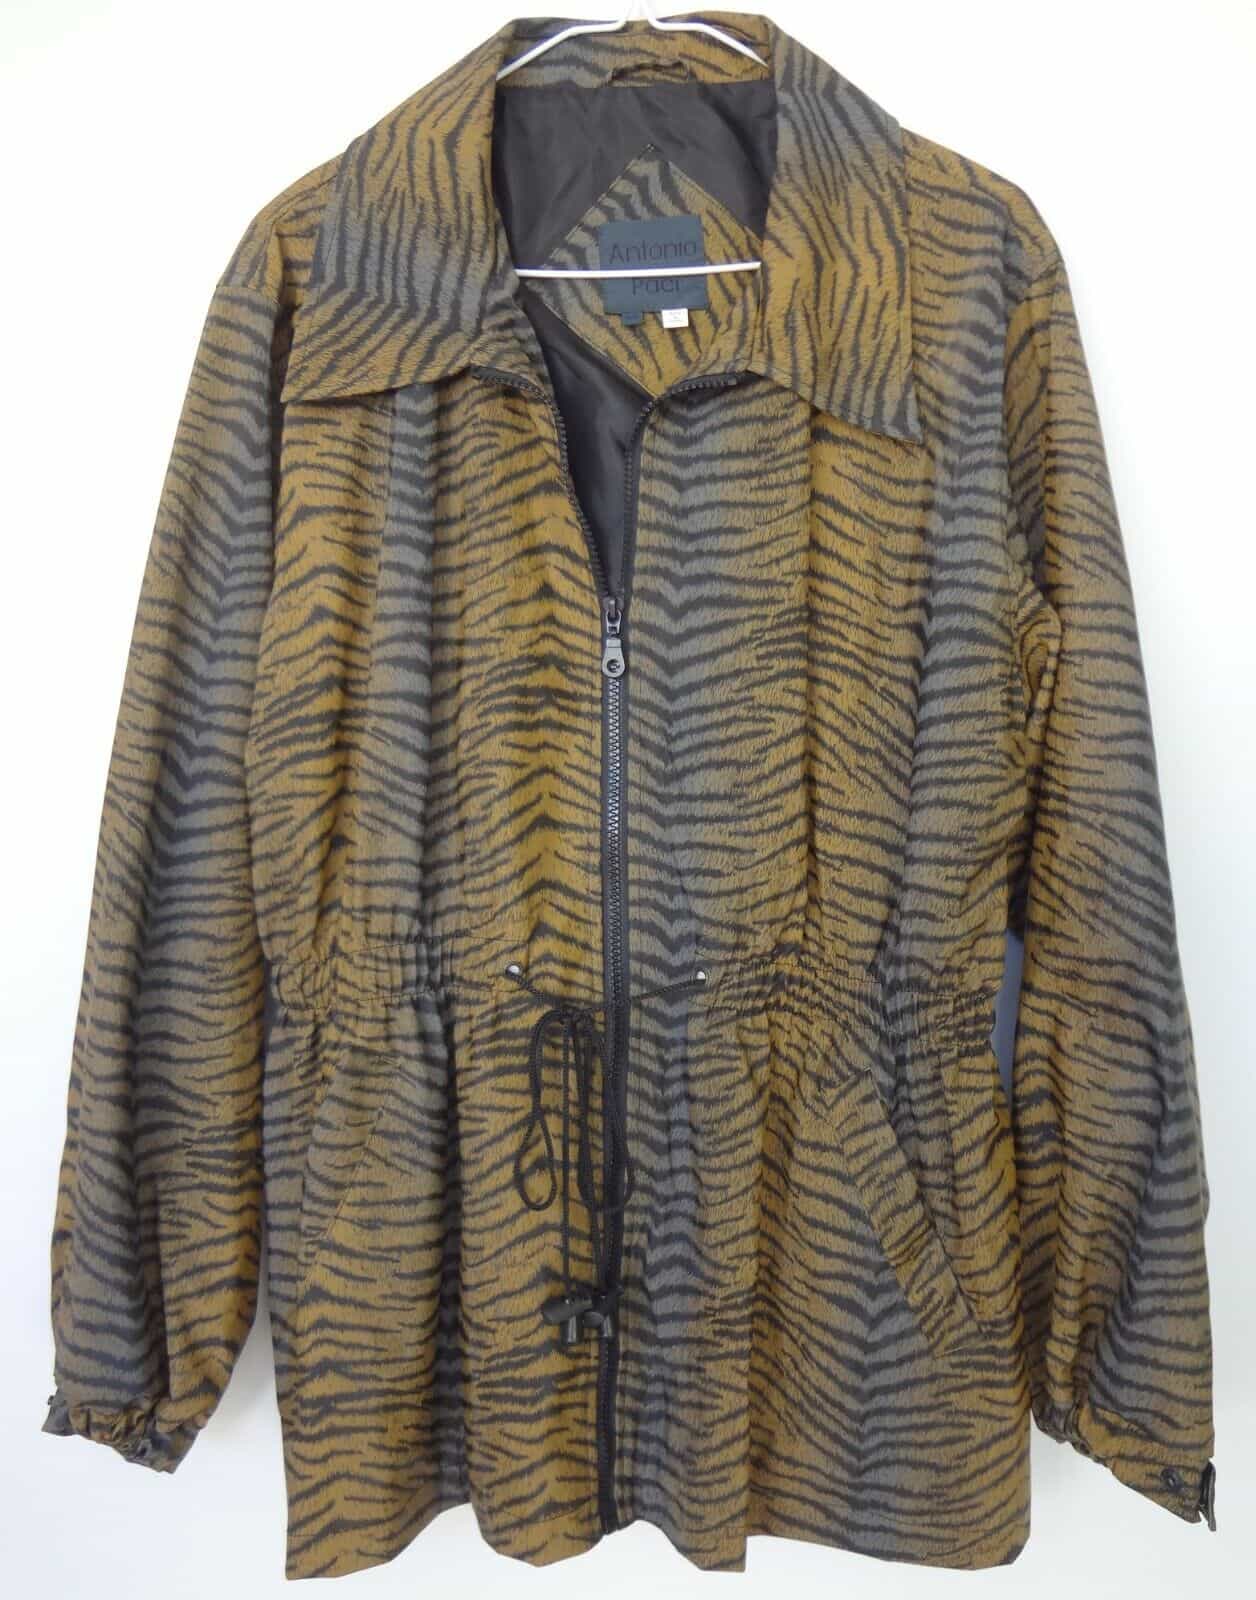 Antonio Paci Animal Print Rain Coat Size XL #312